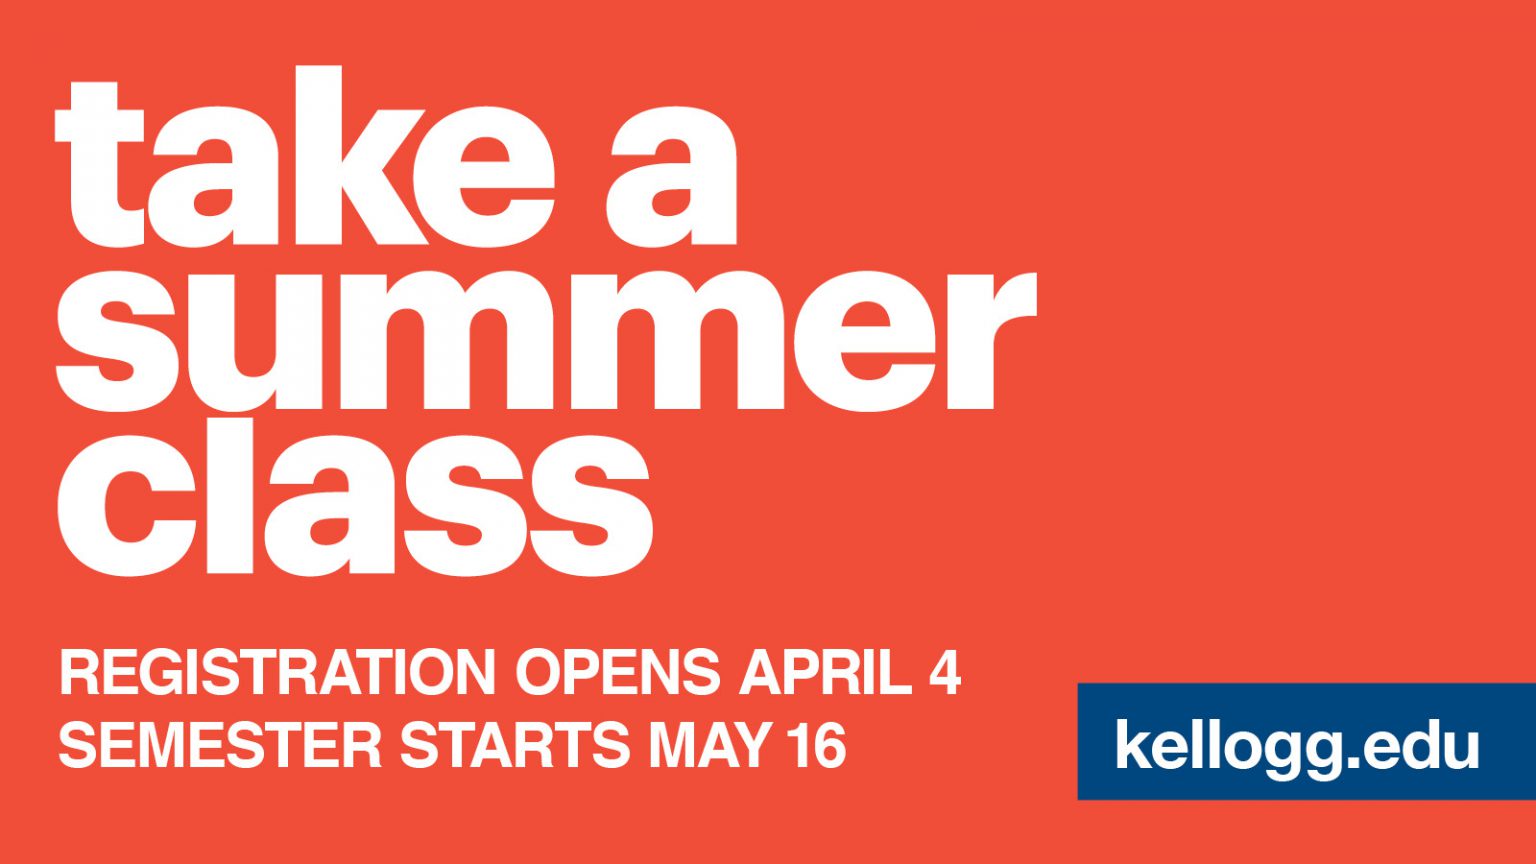 Registration for summer classes opens April 4 at Kellogg Community